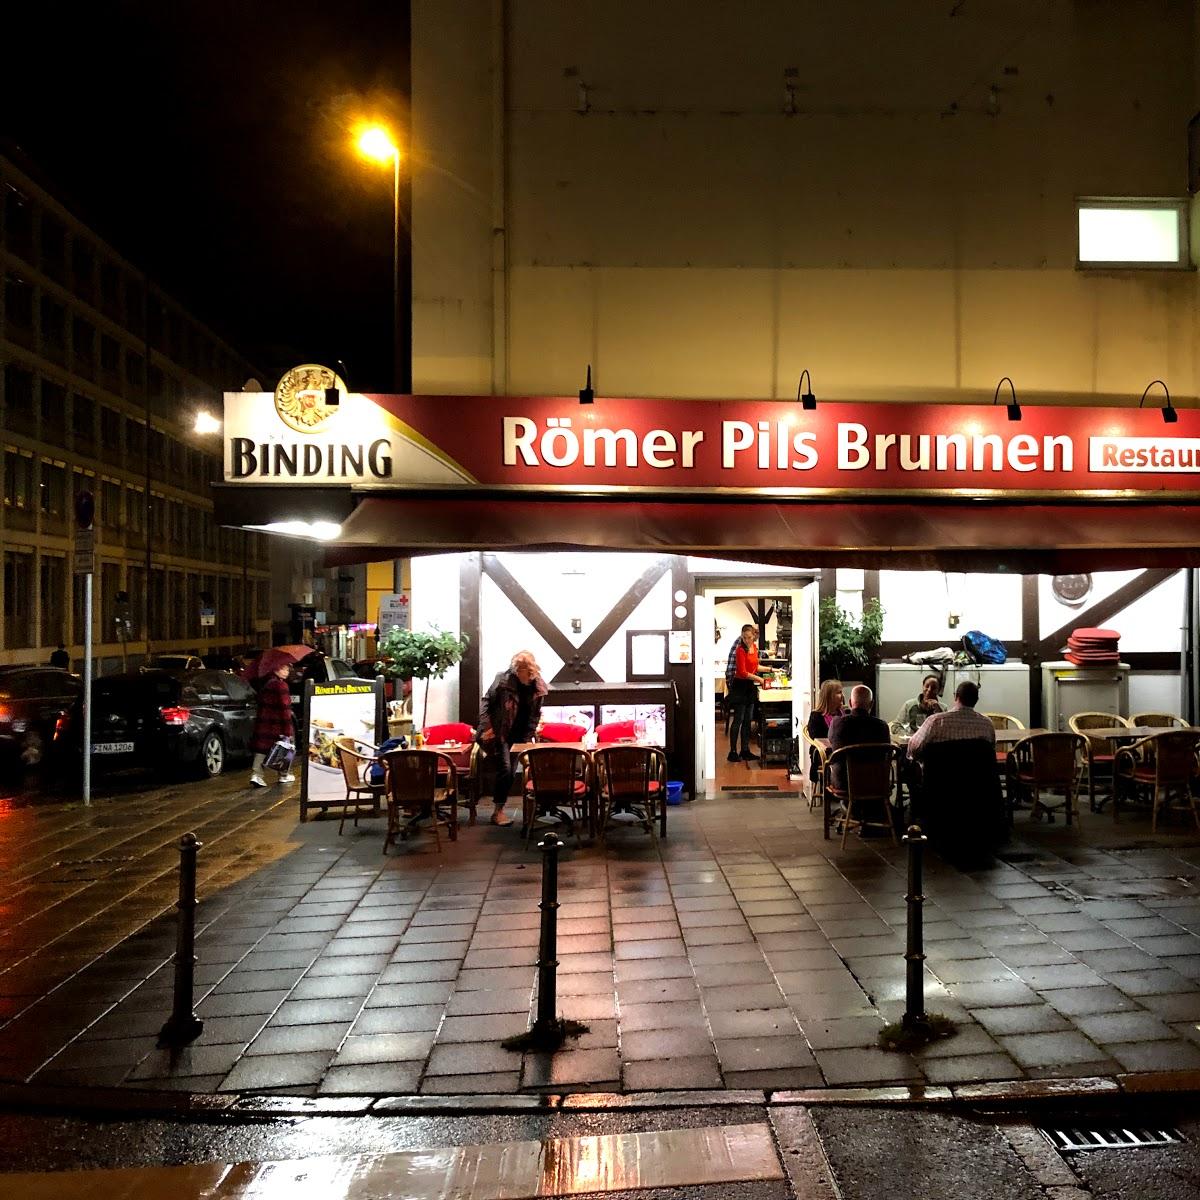 Restaurant "Römer Pils Brunnen" in Frankfurt am Main